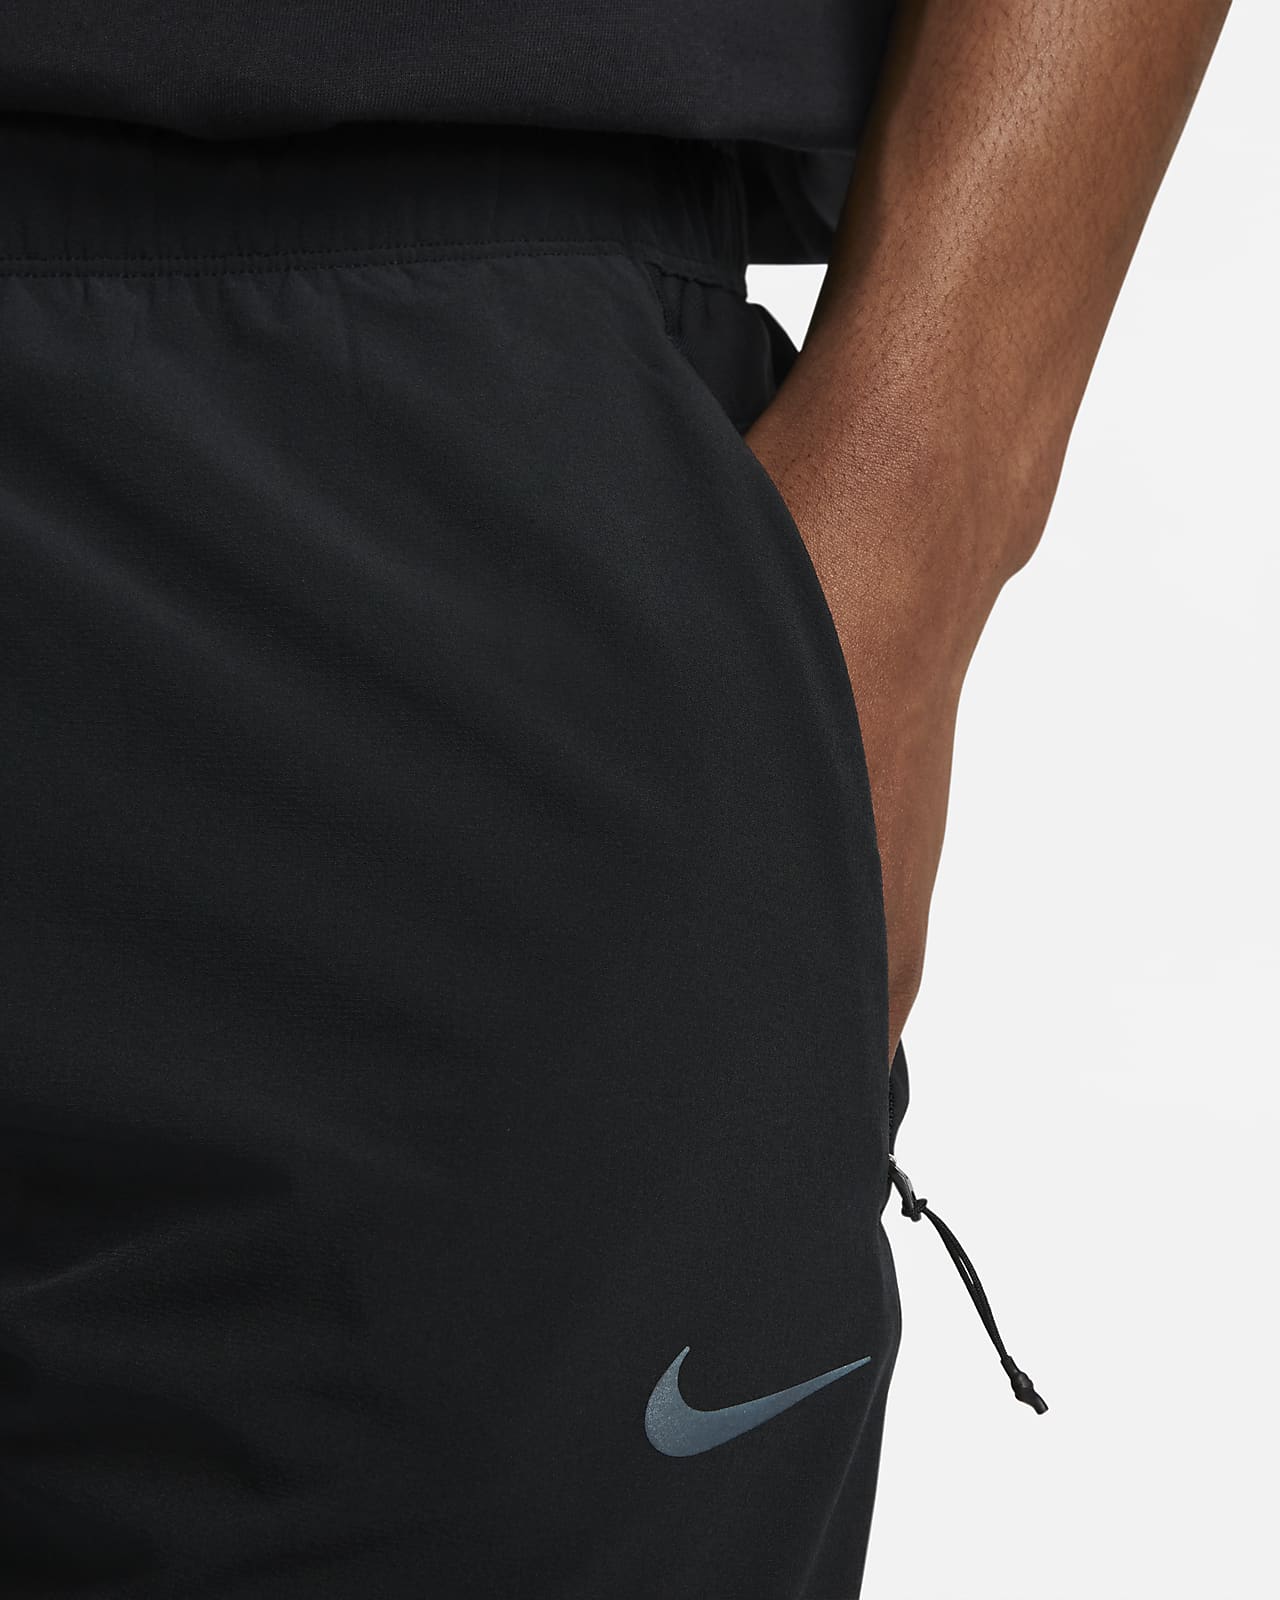 3/4 leggings Nike Dri-FIT - Trousers - Men's textile - Running